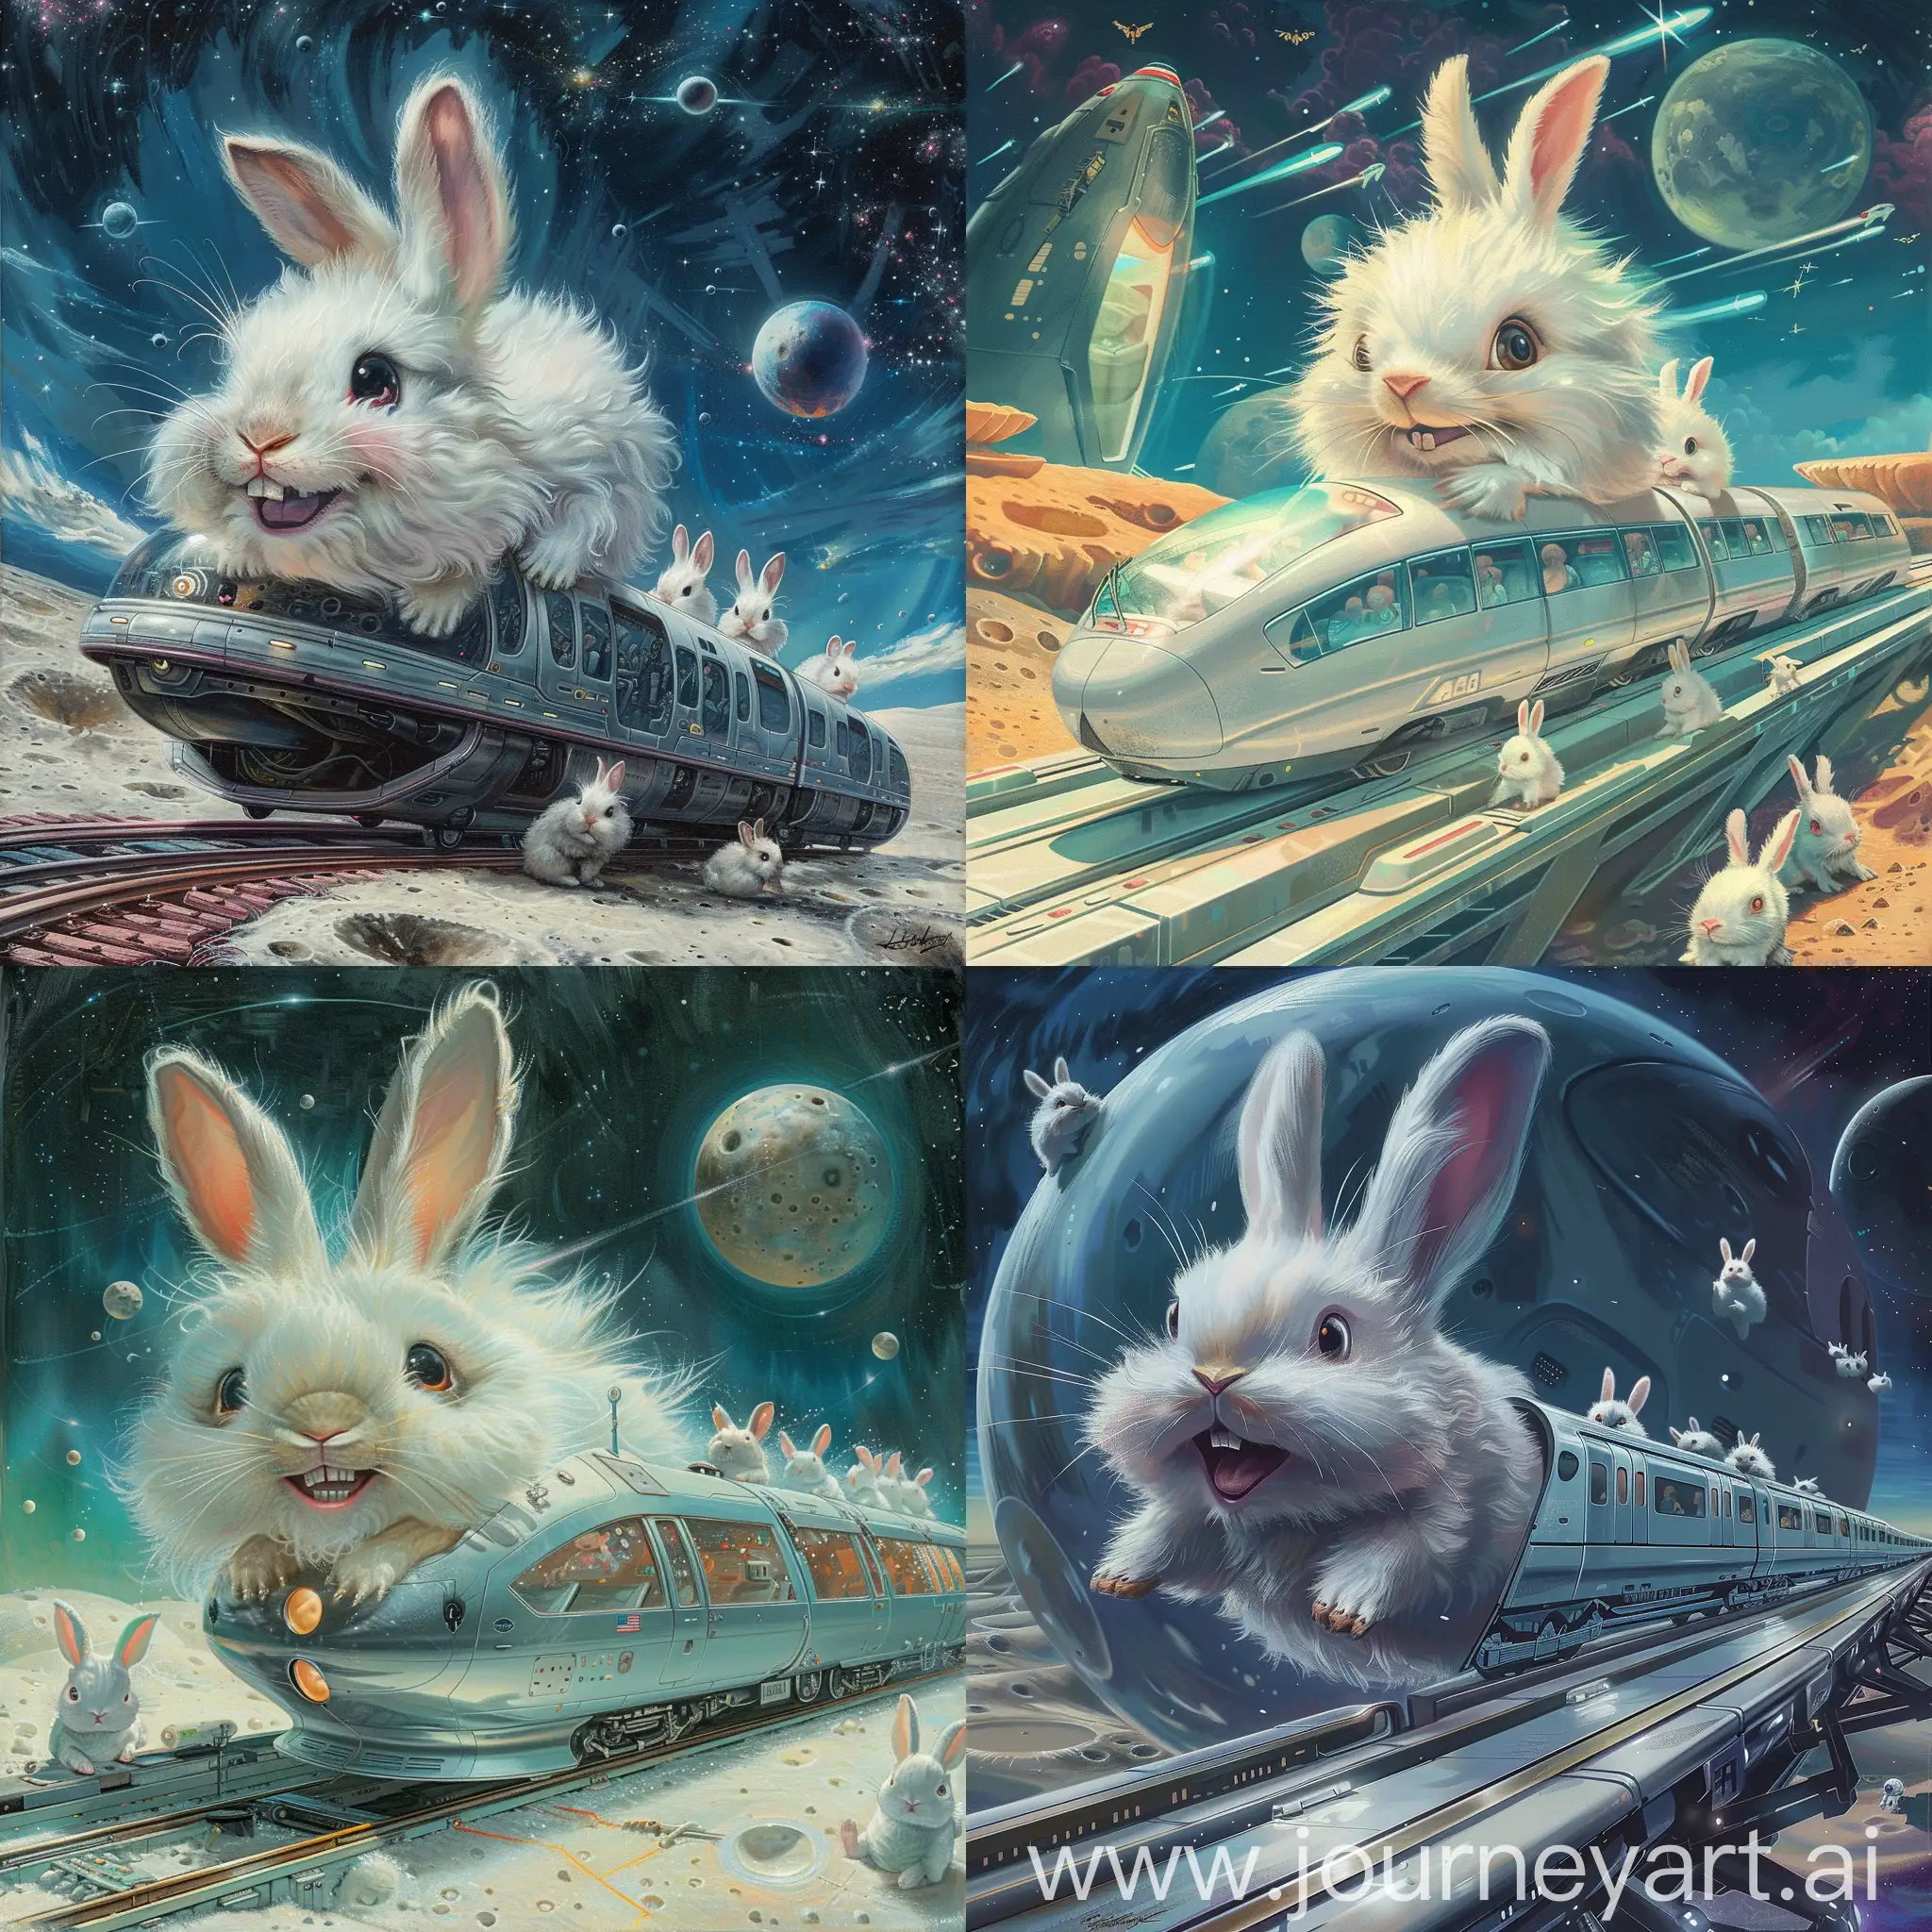 Smiling-White-Rabbit-Transforms-into-HighSpeed-Train-at-Futuristic-Lunar-Base-Platform